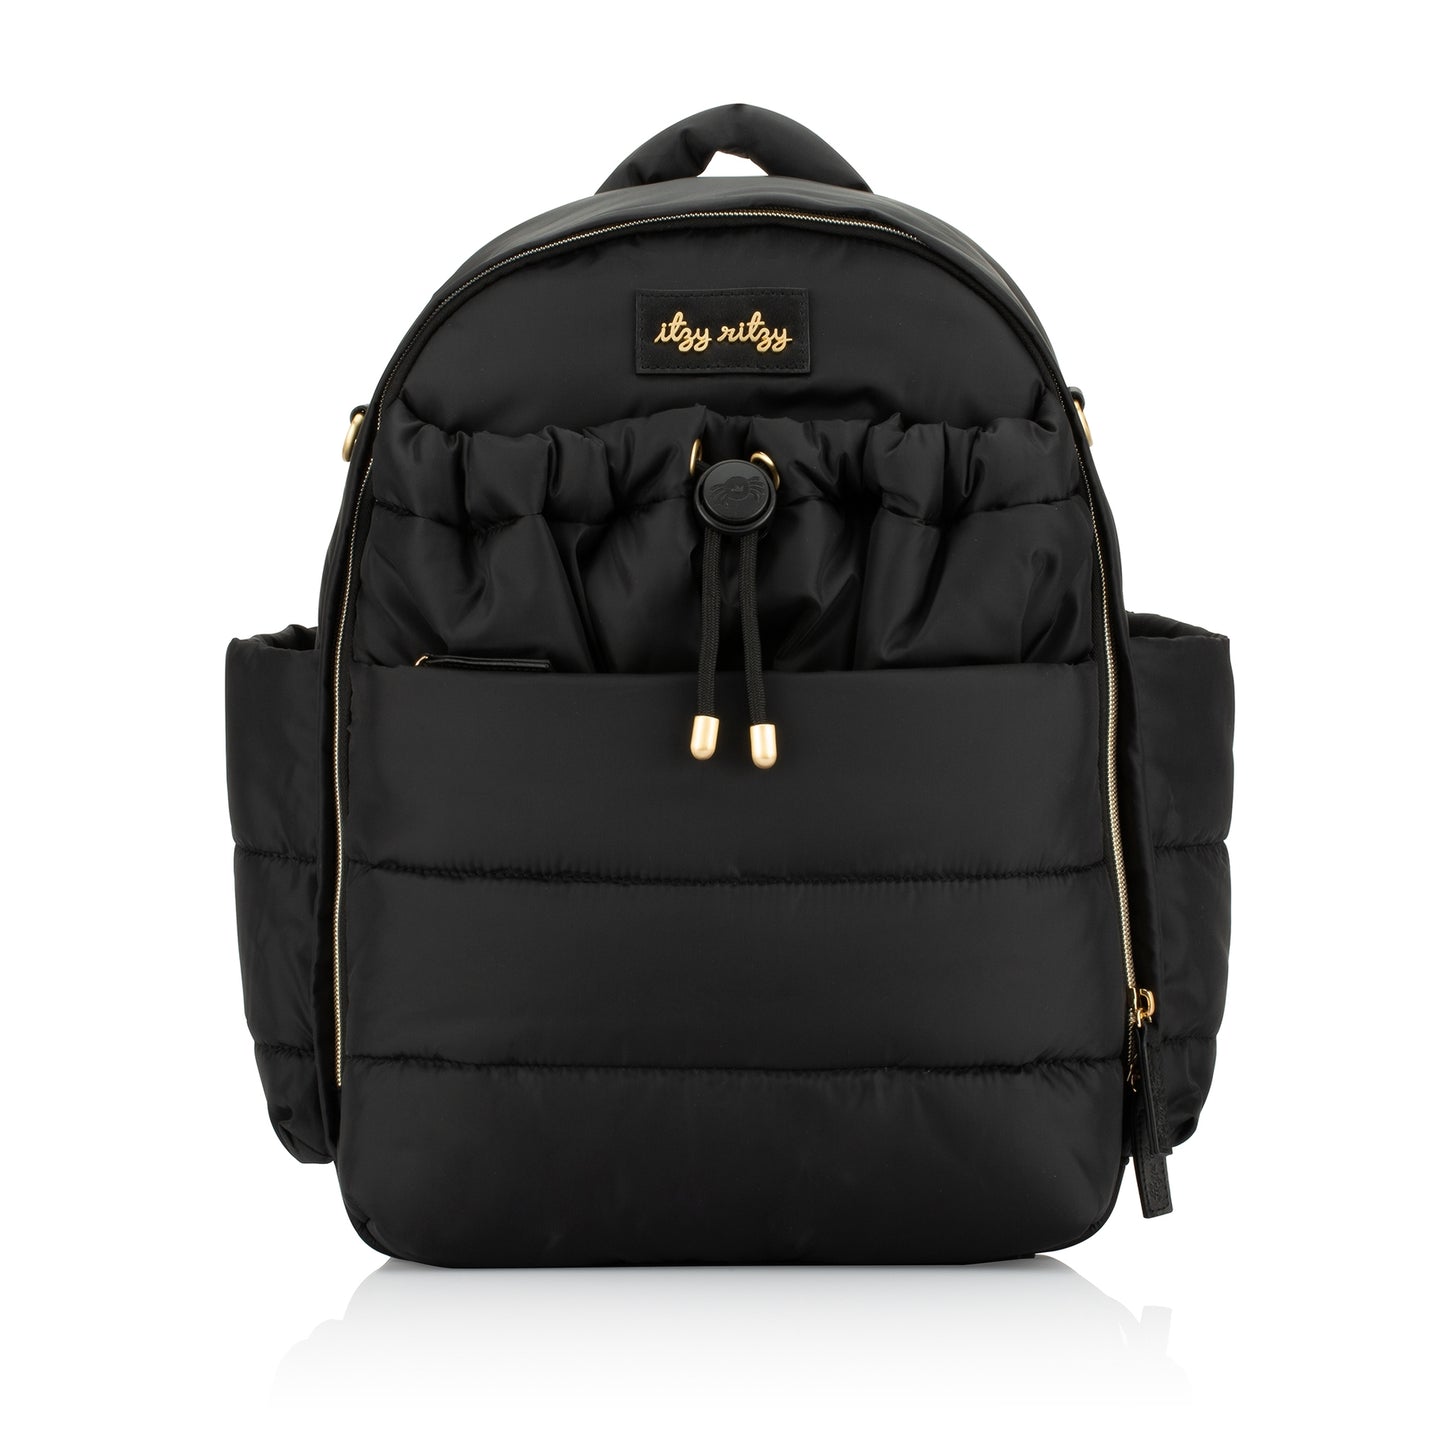 Dream Backpack Midnight Black Diaper Bag Itzy Ritzy